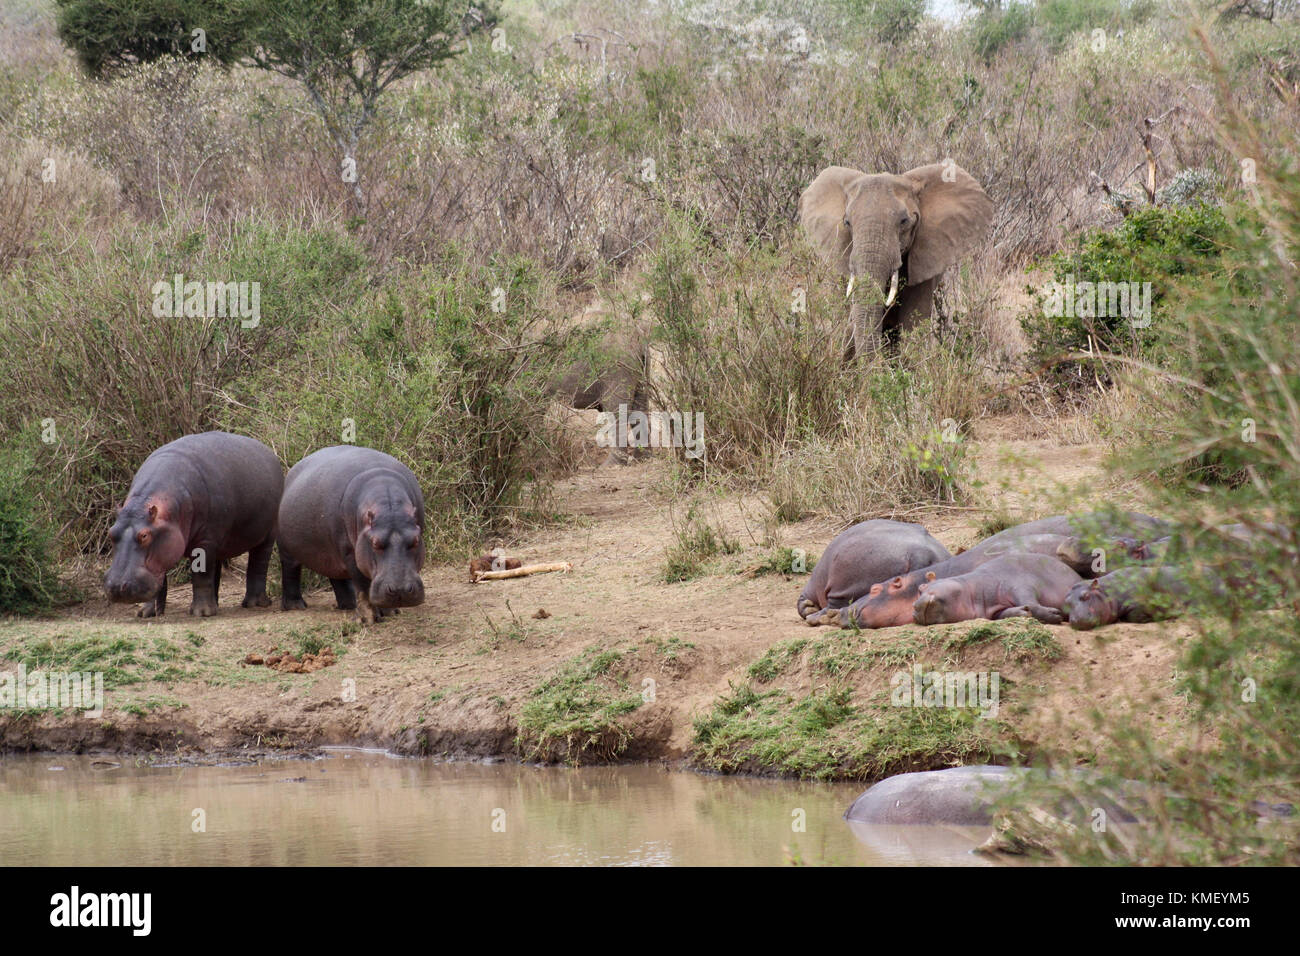 Elephants (Loxodonta africana) join a group of hippos (Hippopotamus amphibius) on the banks of the Ewaso Nyiro River. Laikipia, Kenya Stock Photo